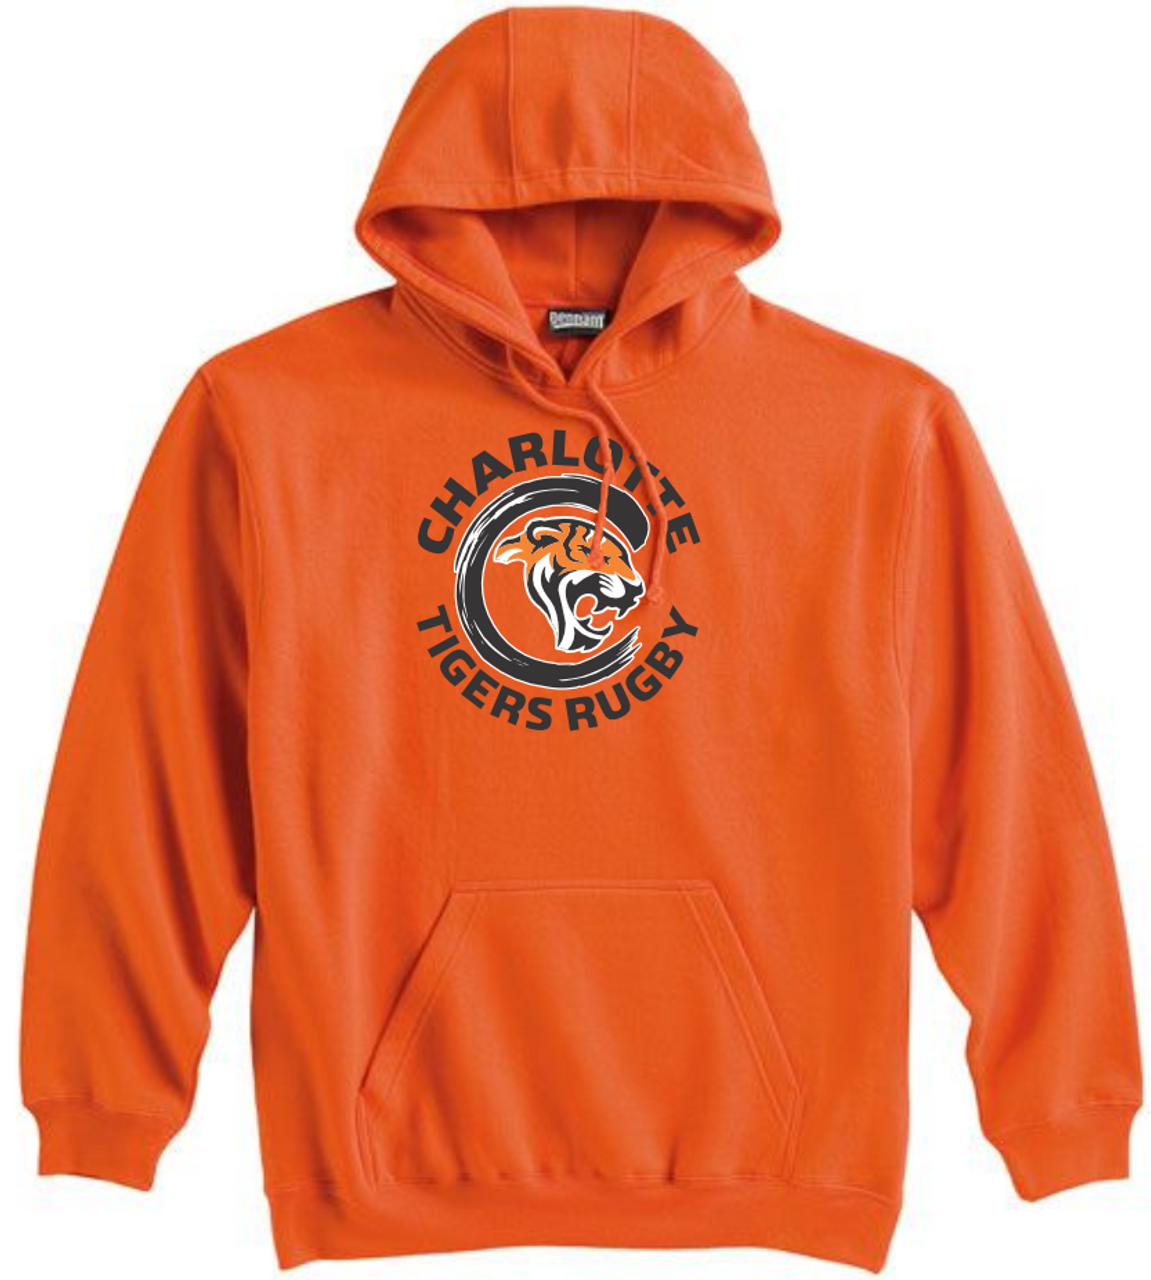 Charlotte Tigers Hooded Sweatshirt, Orange